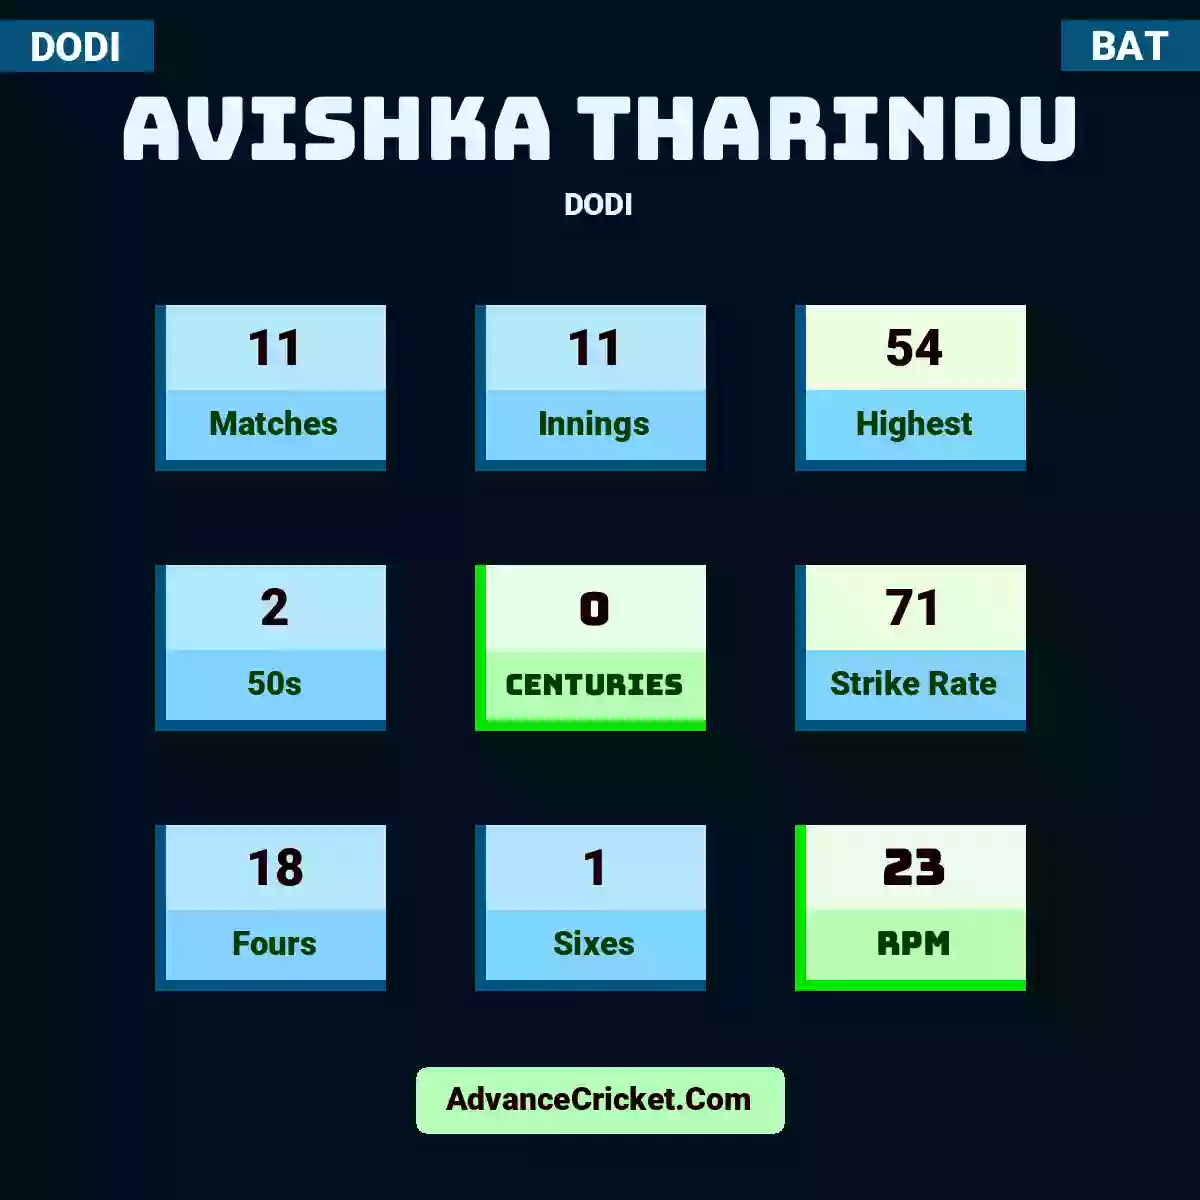 Avishka Tharindu DODI , Avishka Tharindu played 11 matches, scored 54 runs as highest, 2 half-centuries, and 0 centuries, with a strike rate of 71. A.Tharindu hit 18 fours and 1 sixes, with an RPM of 23.